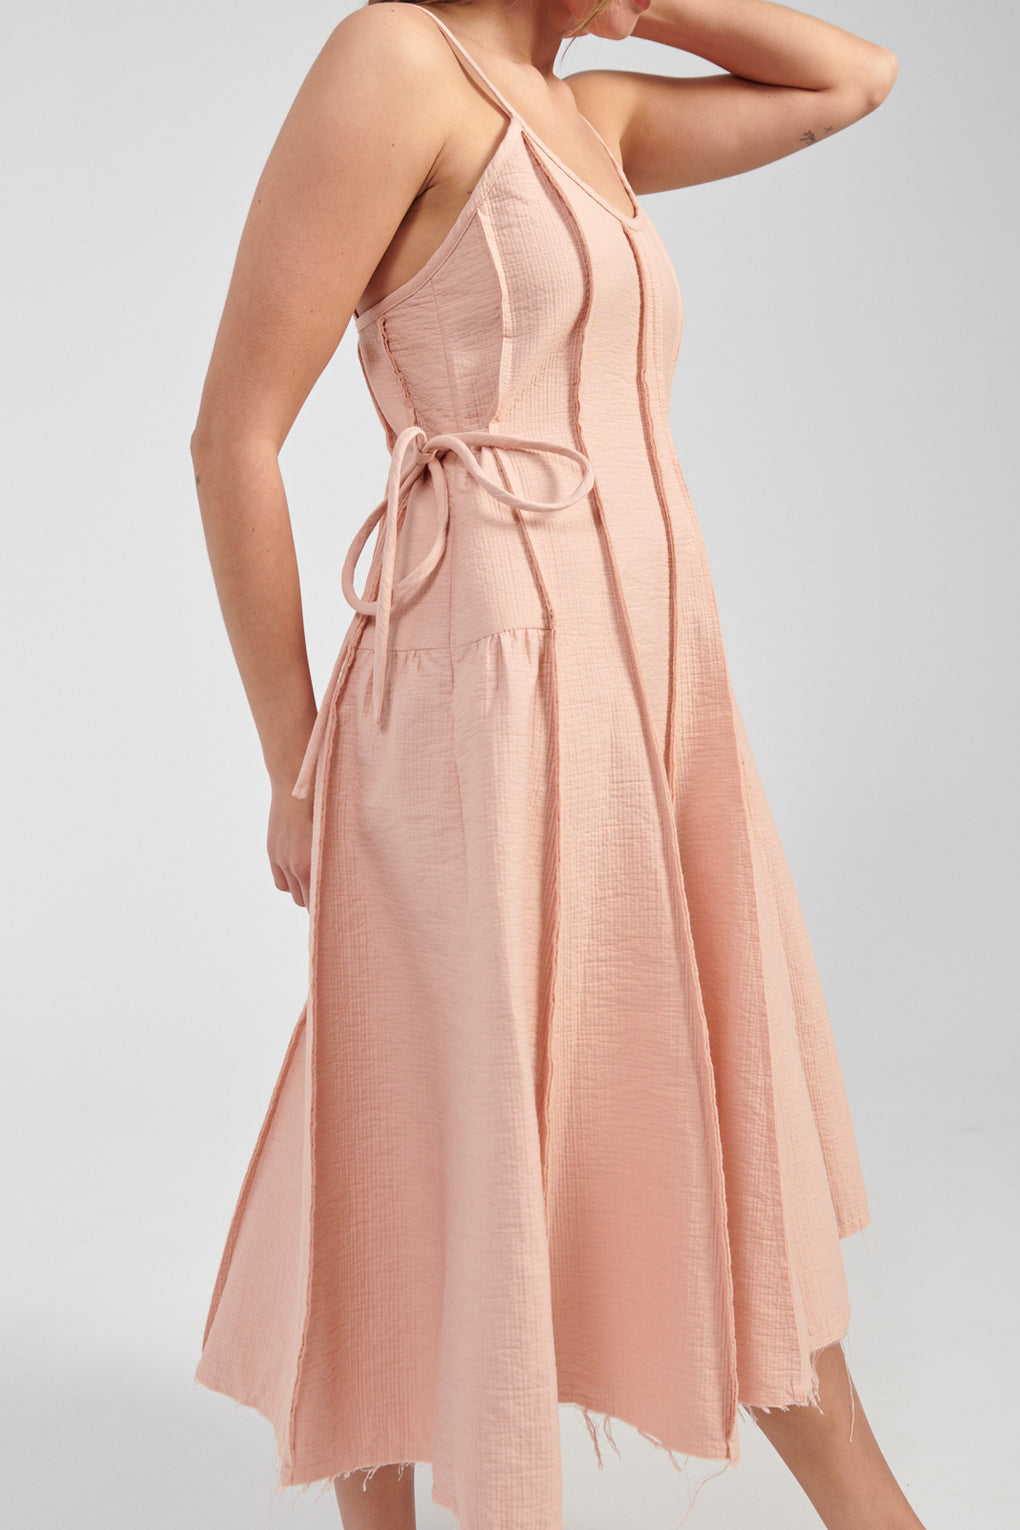 Rachel Comey Madero Dress blush pink-Idun-St. Paul